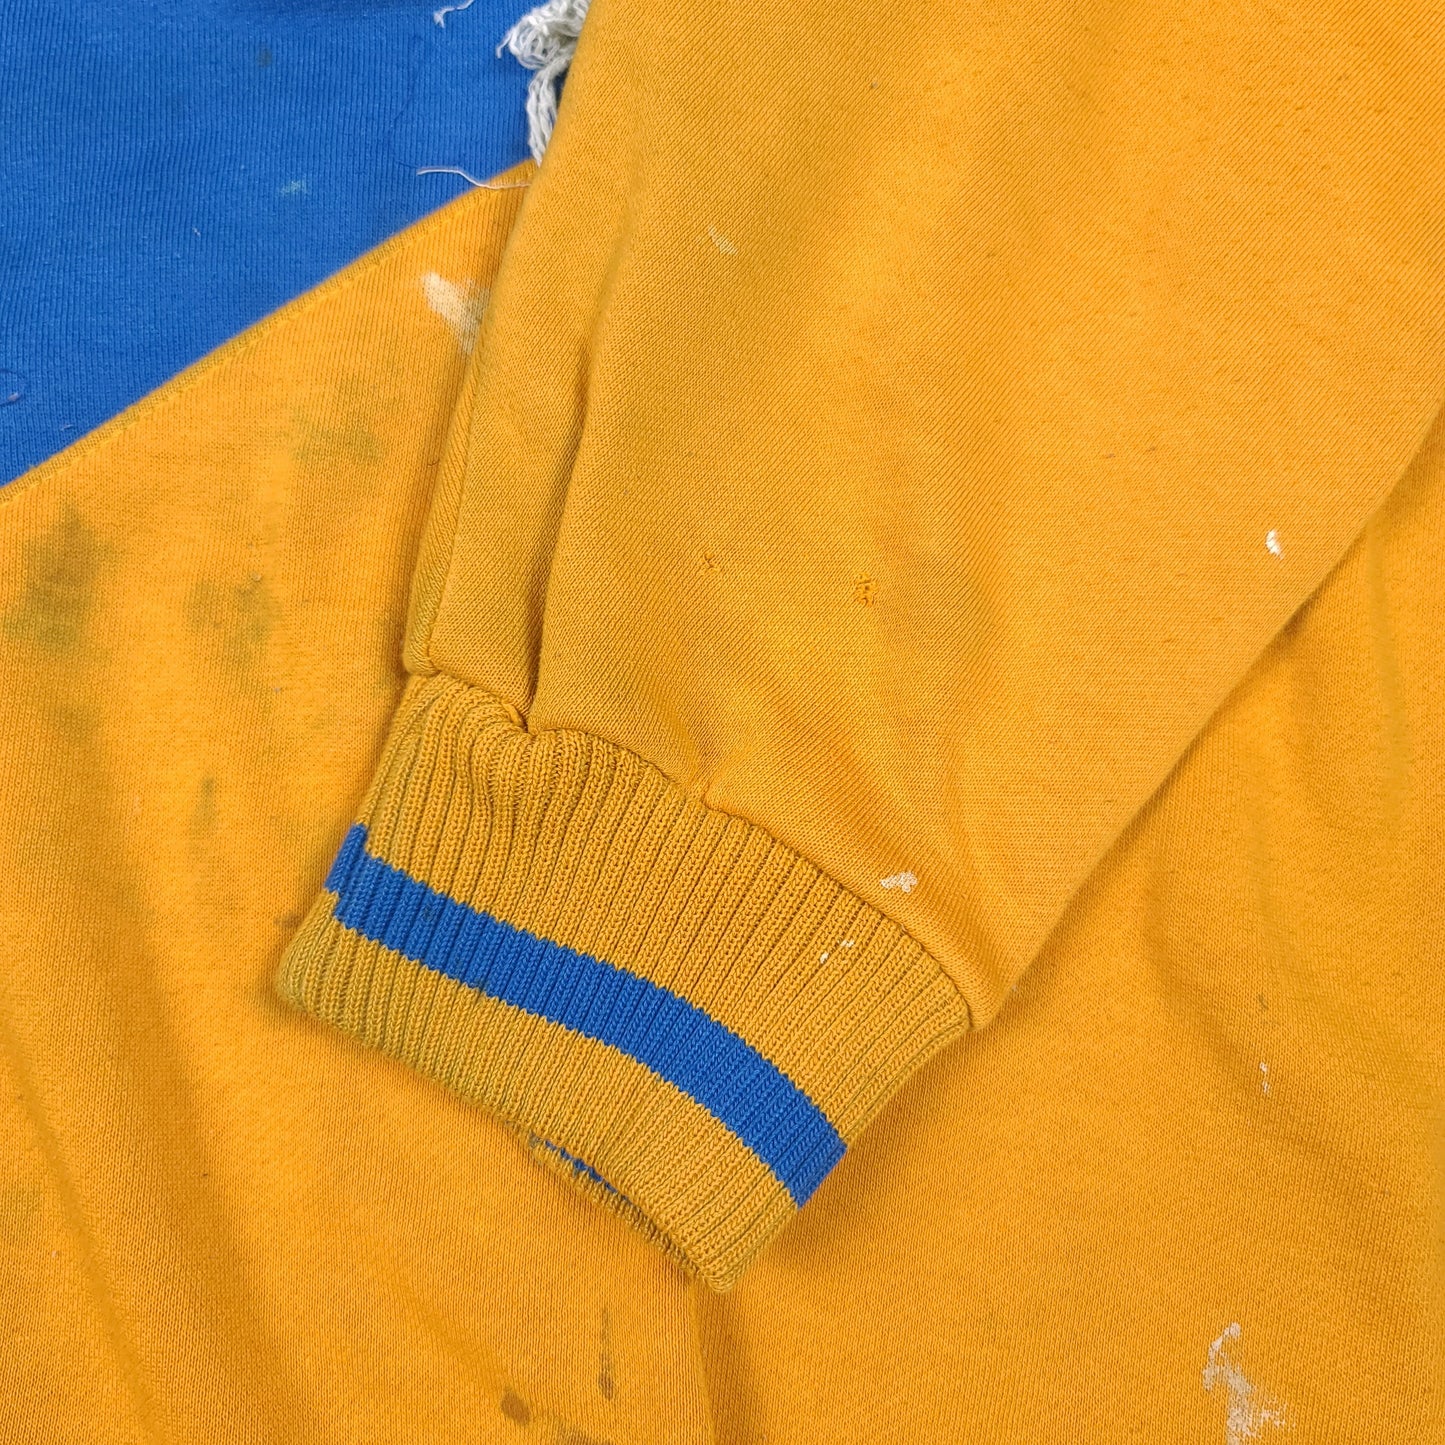 Vintage University of Kentucky Wildcats Blue Yellow Colorblock Sweatshirt (Thrashed)